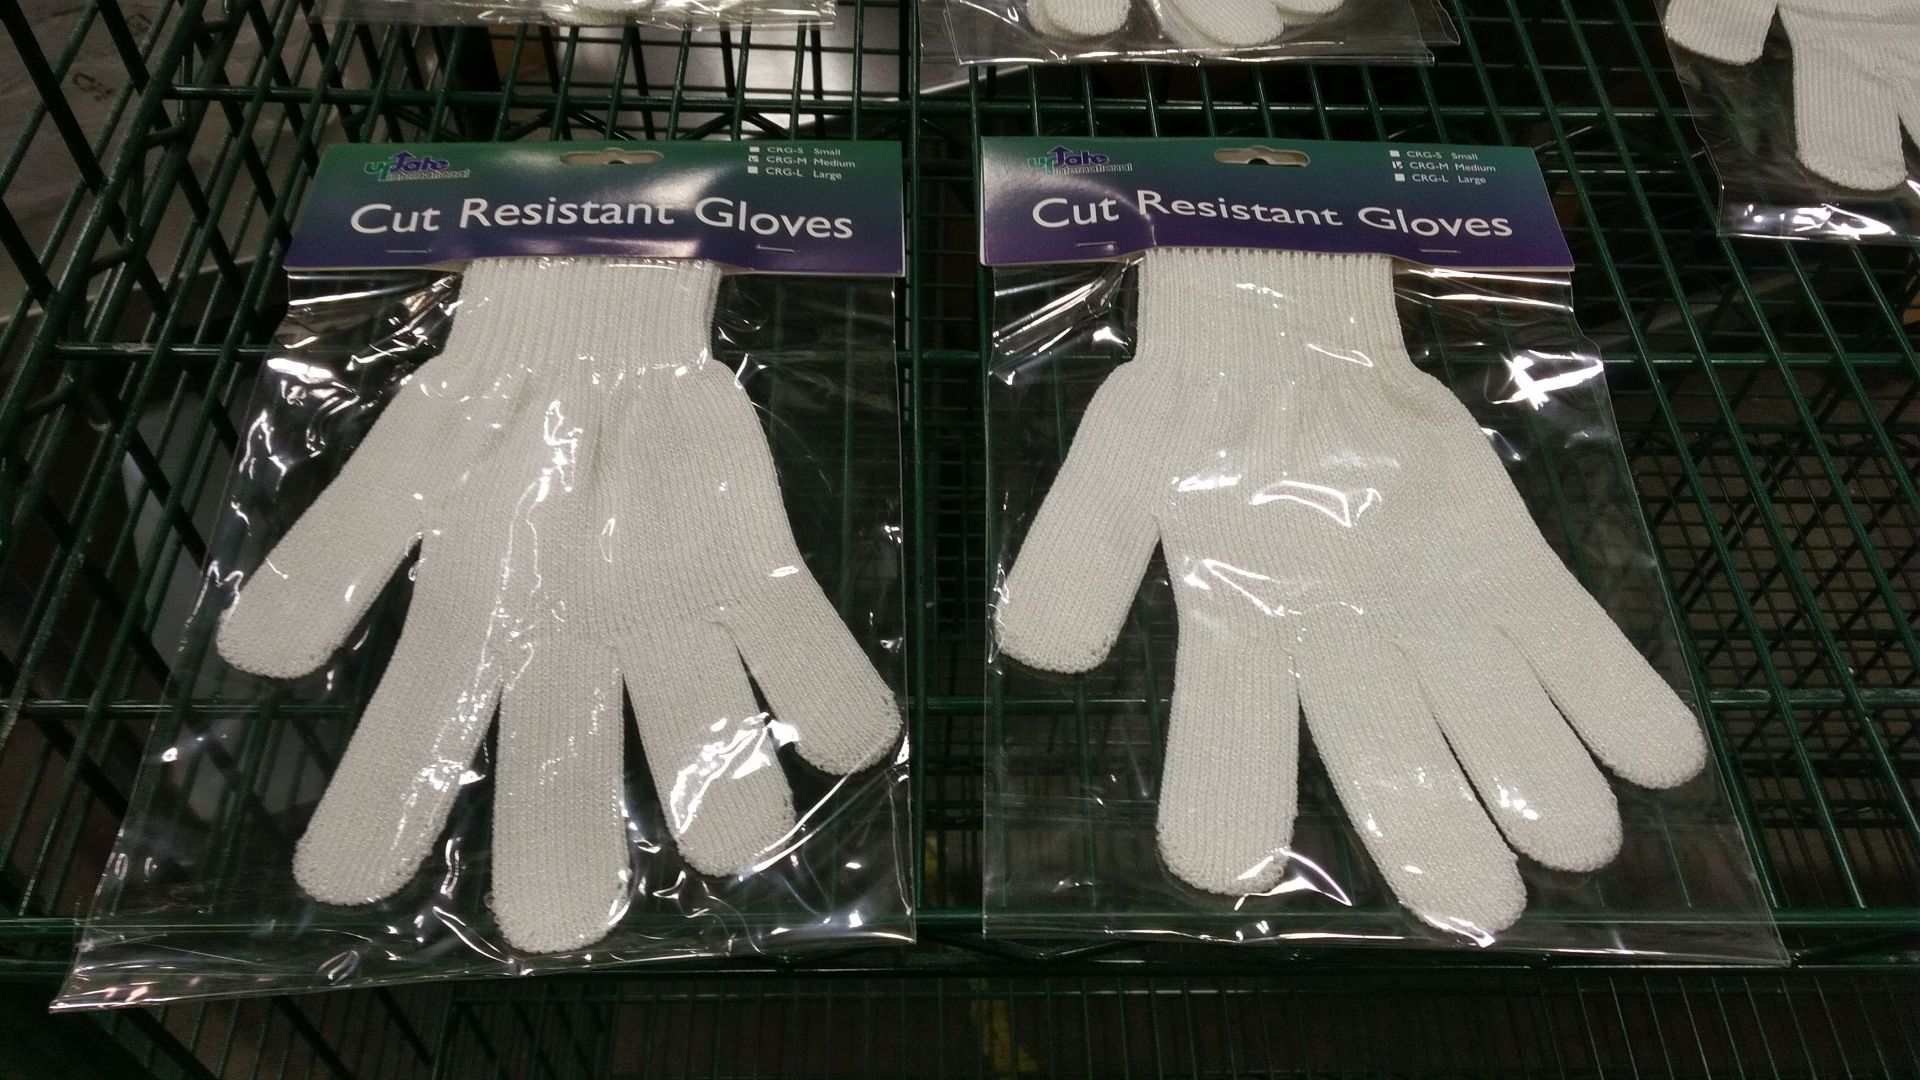 Medium (9.5") Cut-Resistant Gloves - Lot of 2 - Image 3 of 4